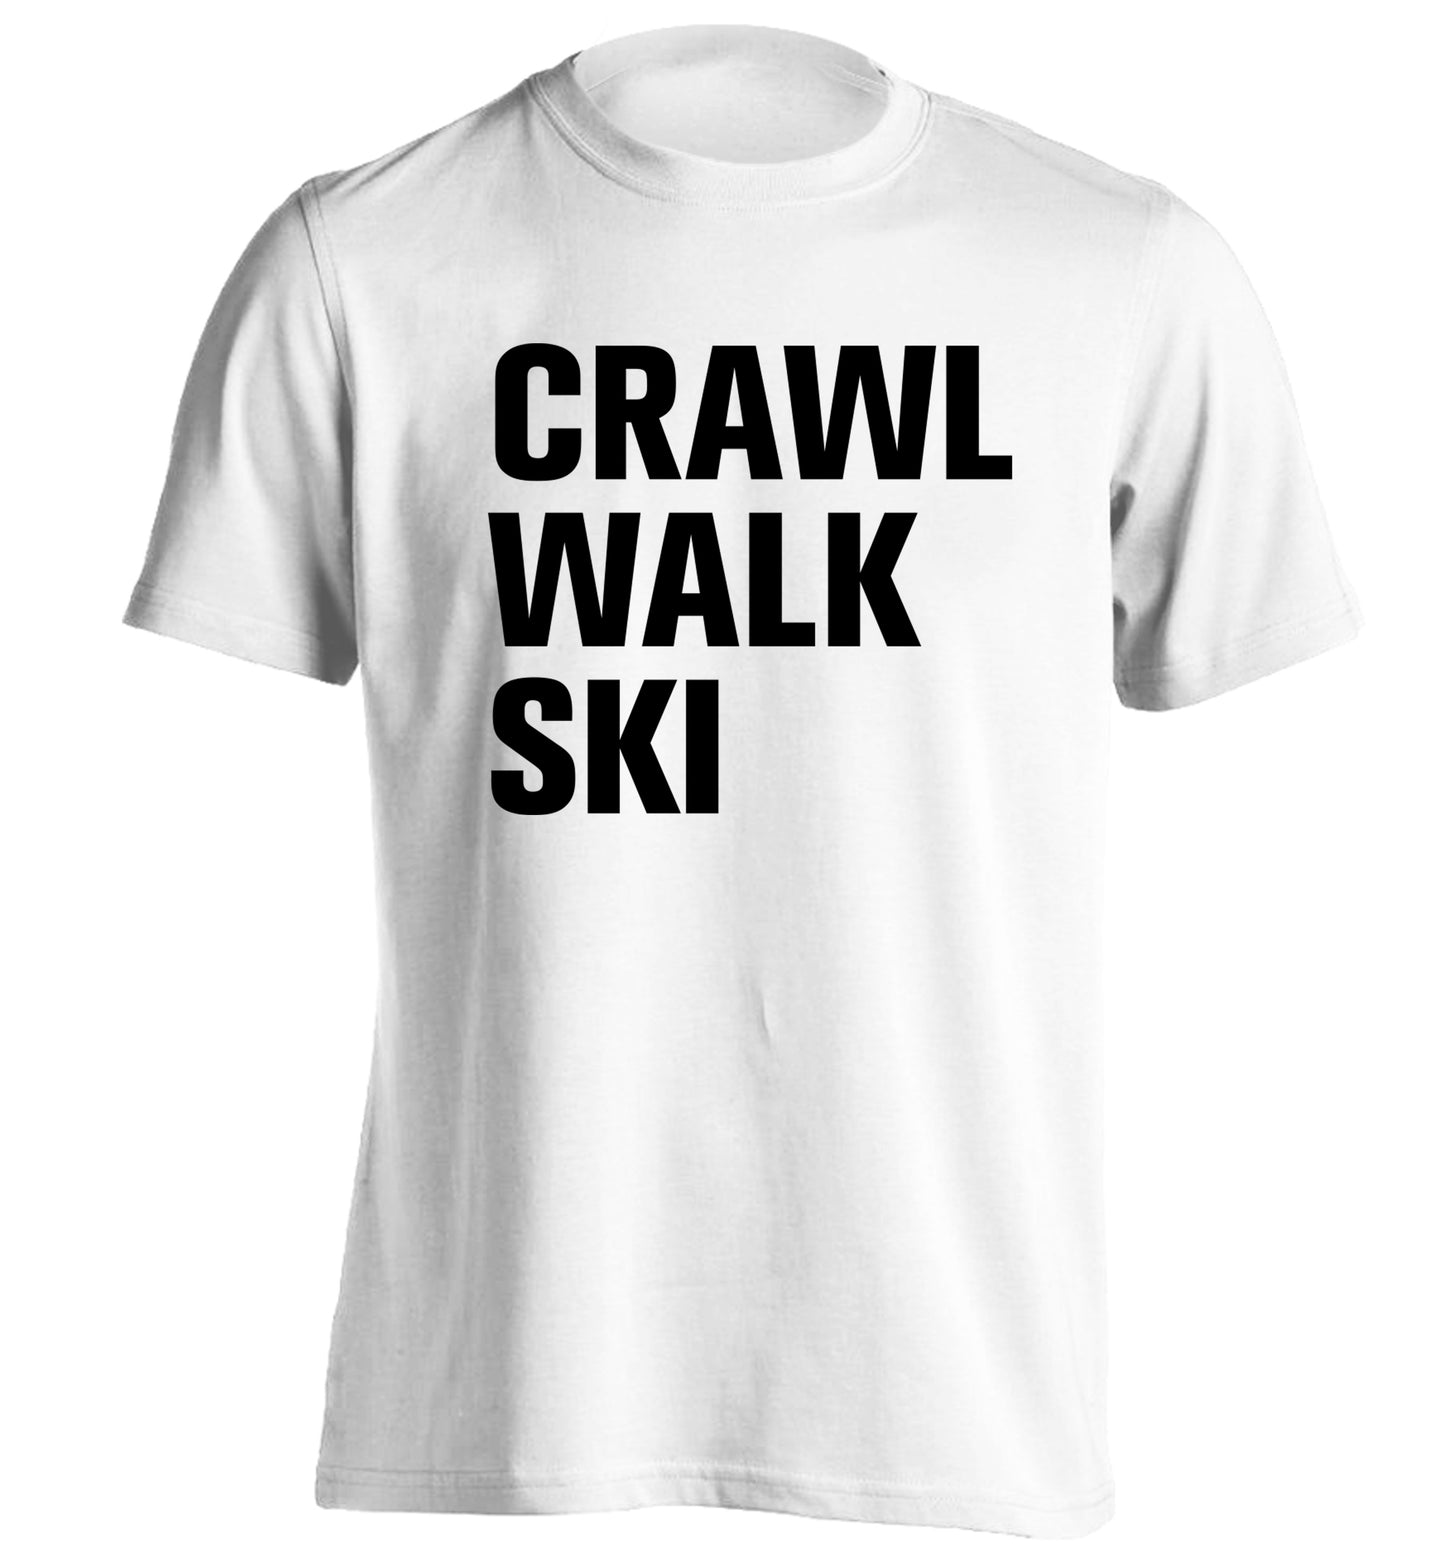 Crawl walk ski adults unisexwhite Tshirt 2XL